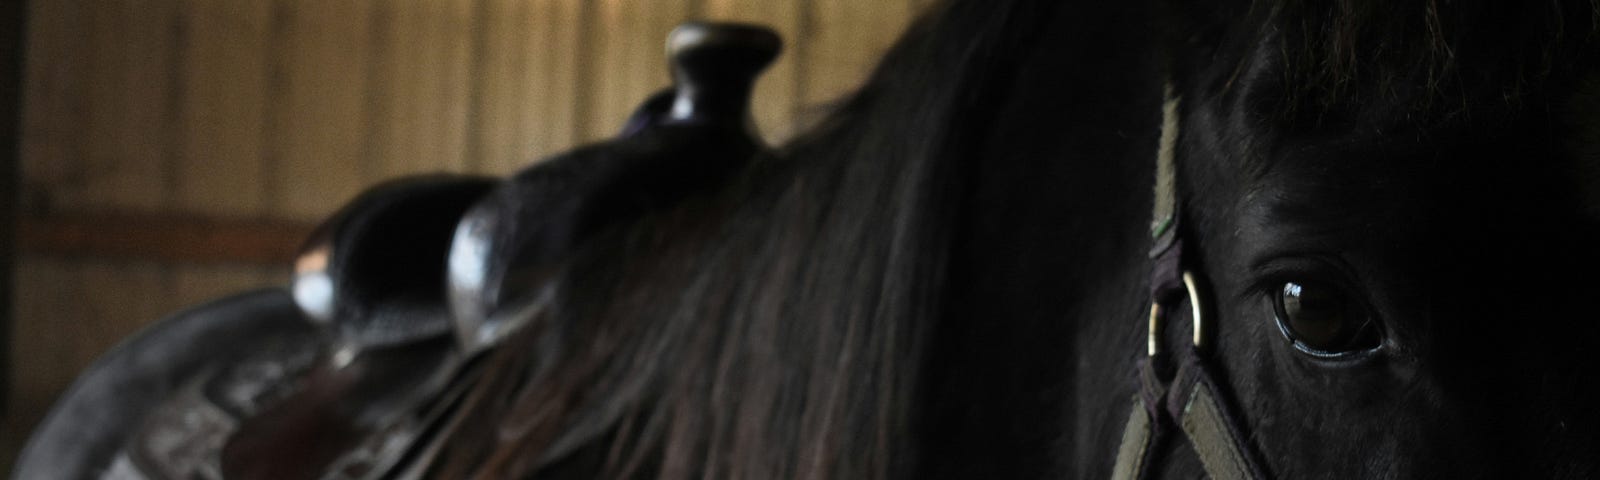 a black horse, close up